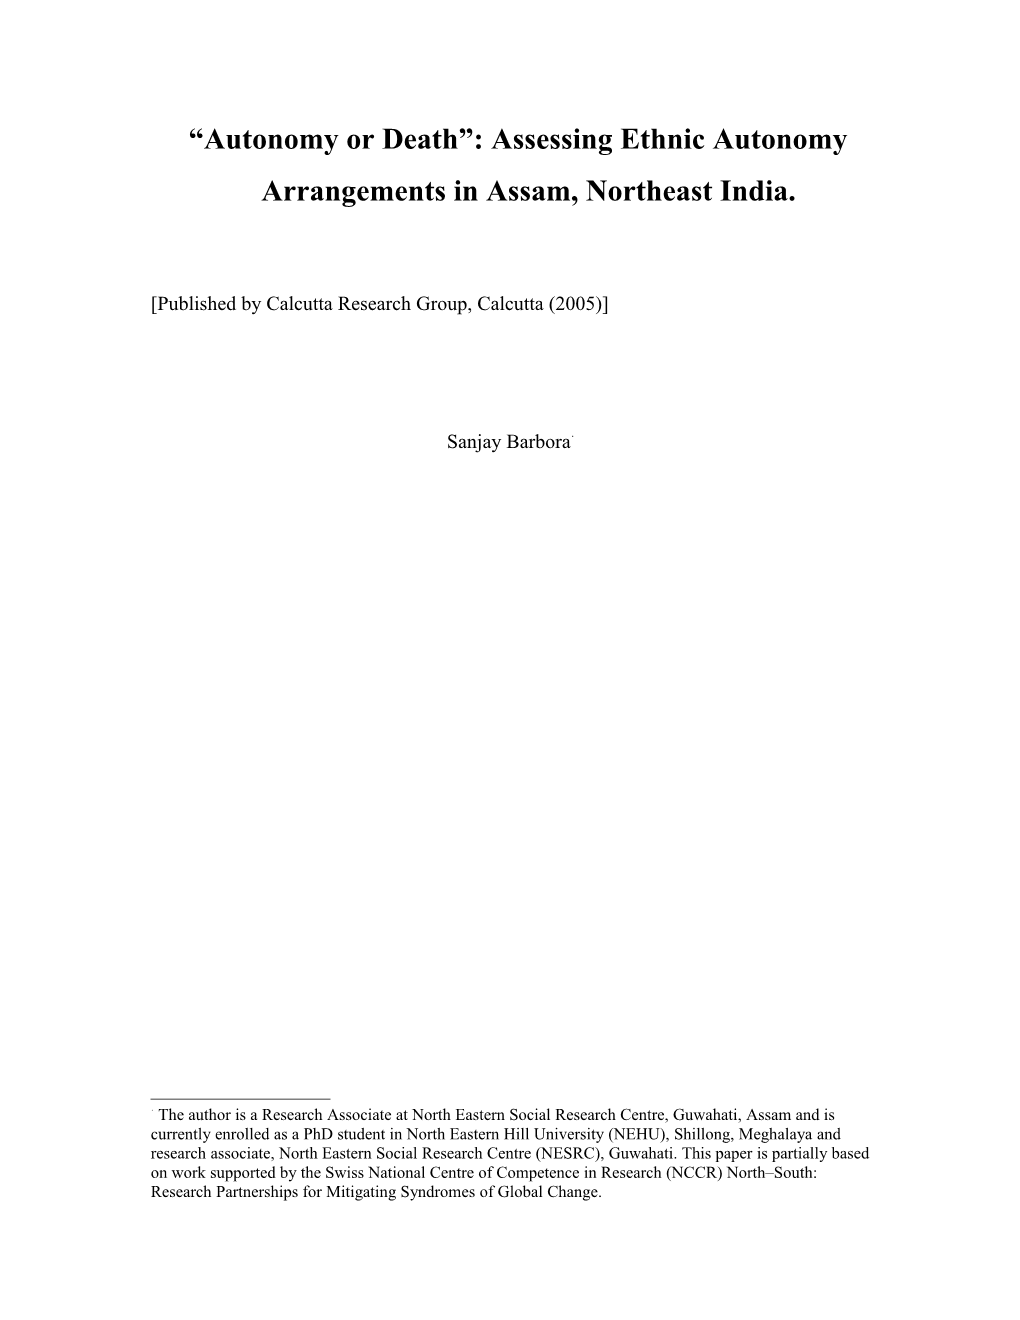 Autonomy Or Death : Assessing Ethnic Autonomy Arrangements in Assam, Northeast India